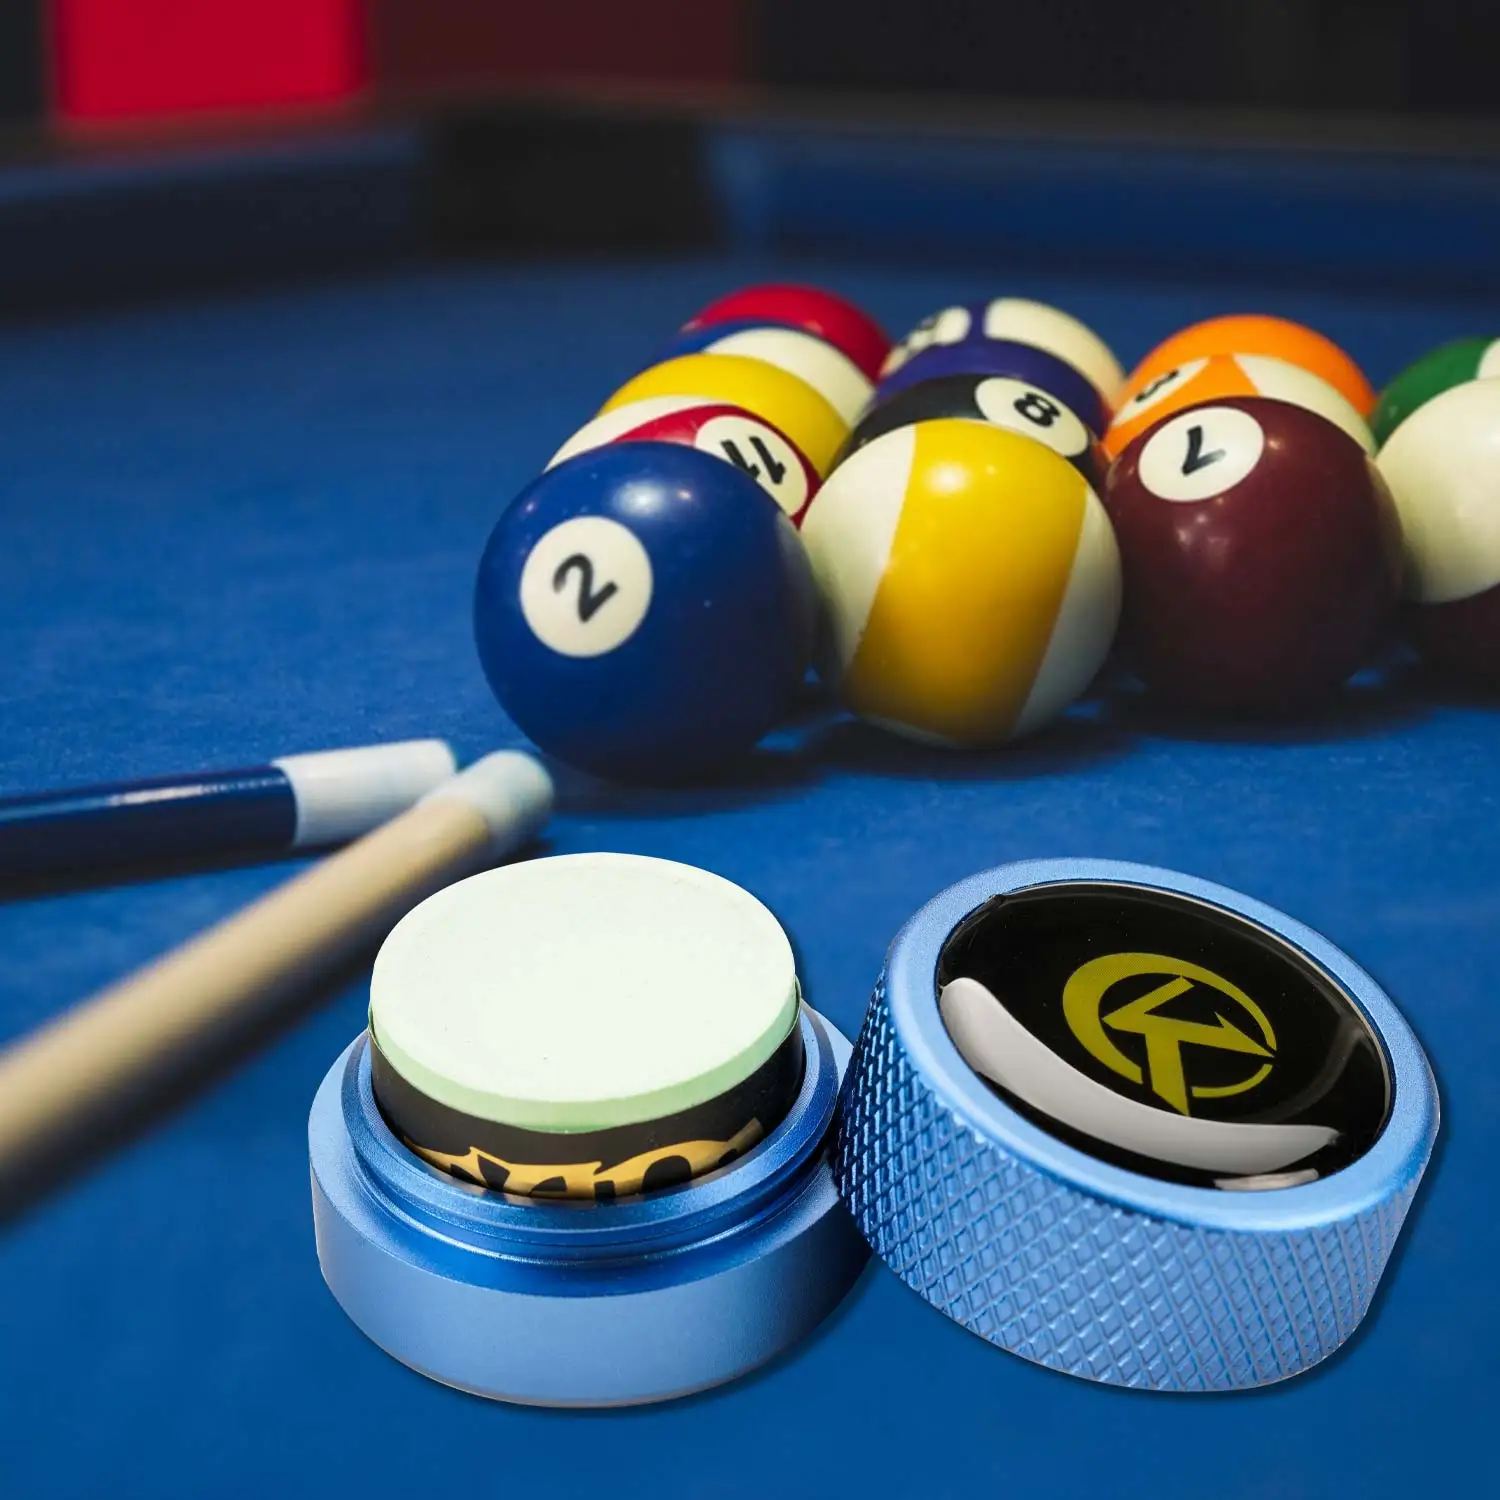 Cue Chalk Holder for Predator 3d Printed billiards, Pool, Snooker